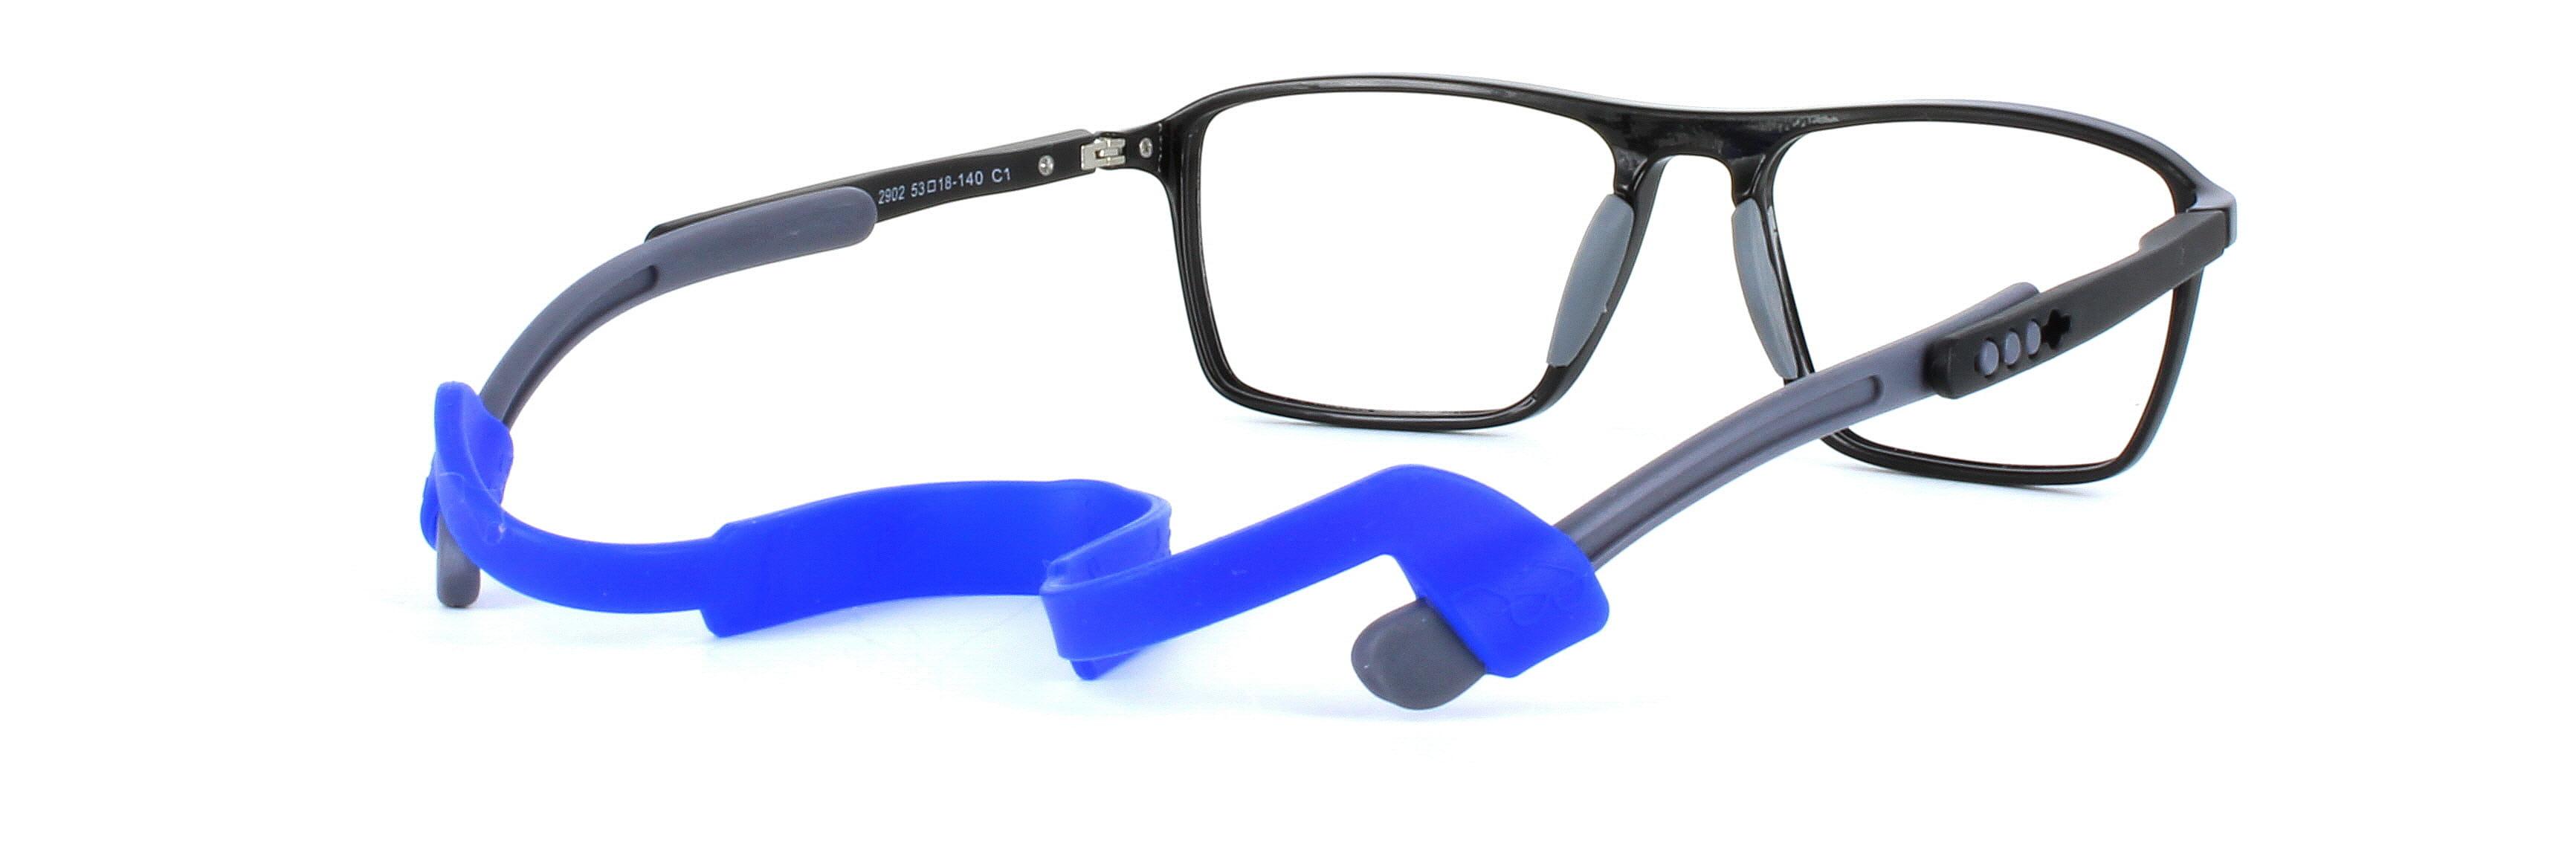 Ramble - unisex prescription sports glasses - black & grey - image view 4